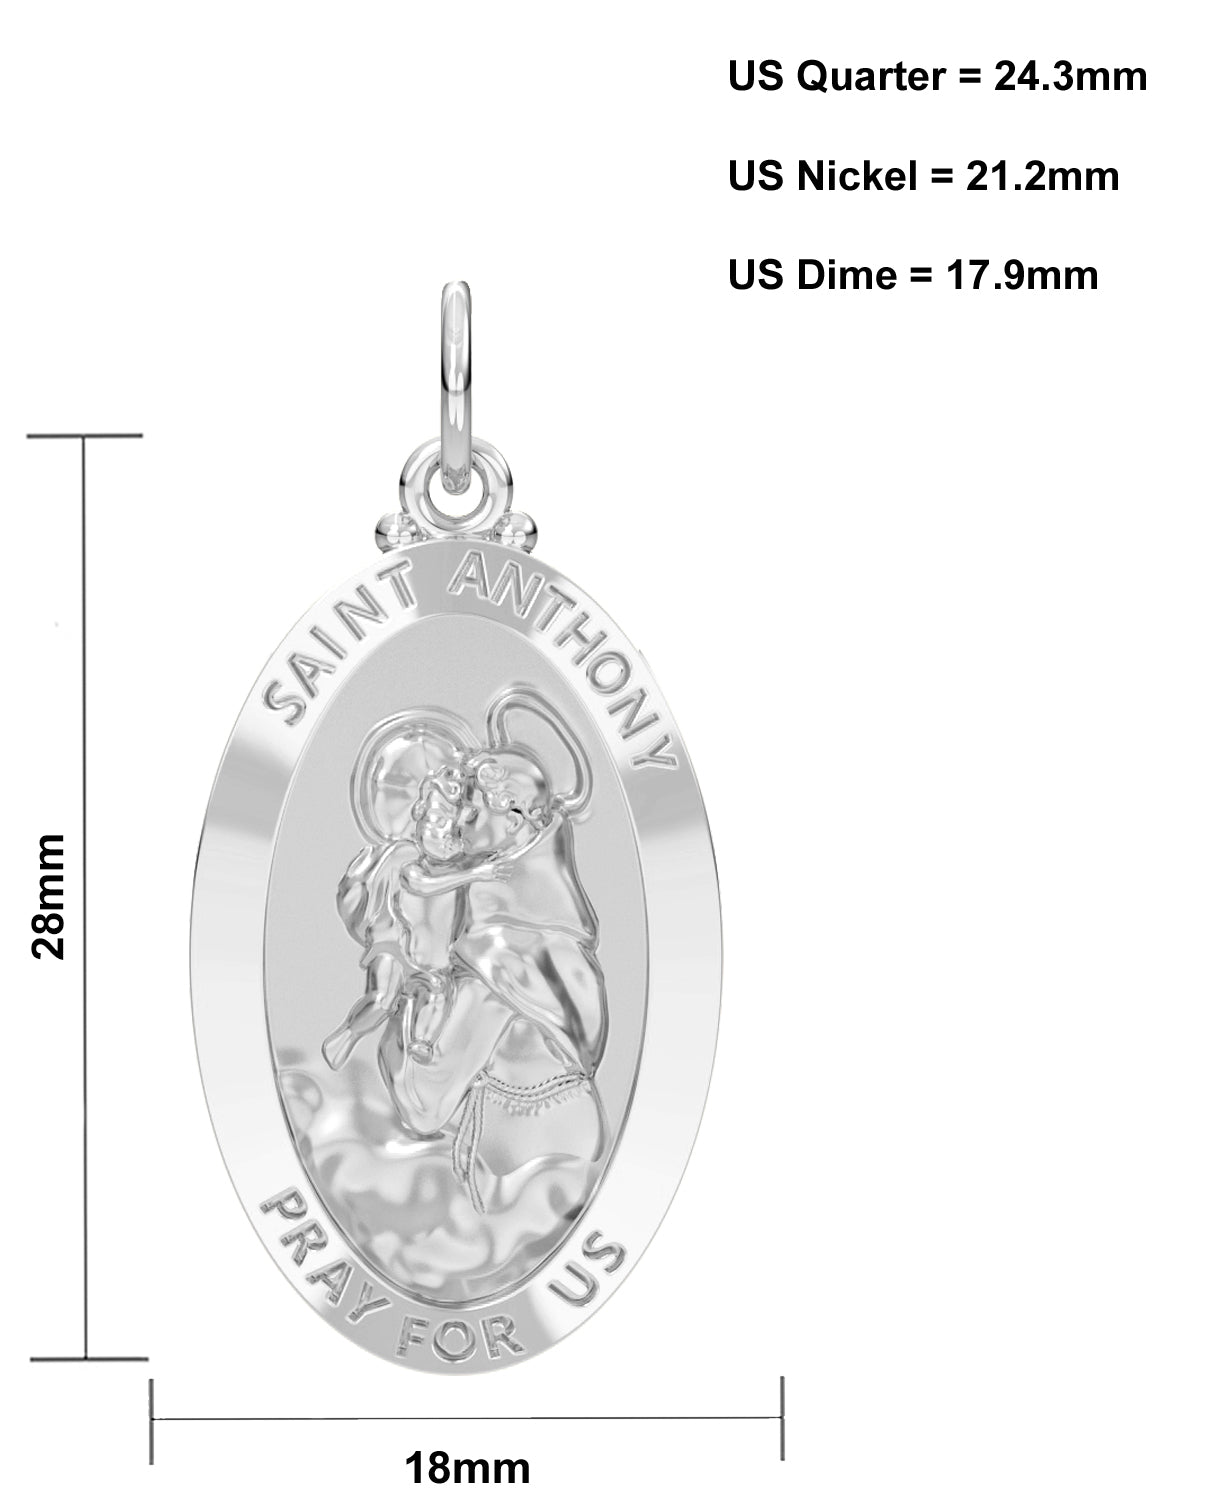 Men's 925 Sterling Silver Saint Anthony Polished Finish Oval Pendant Necklace, 28mm - US Jewels